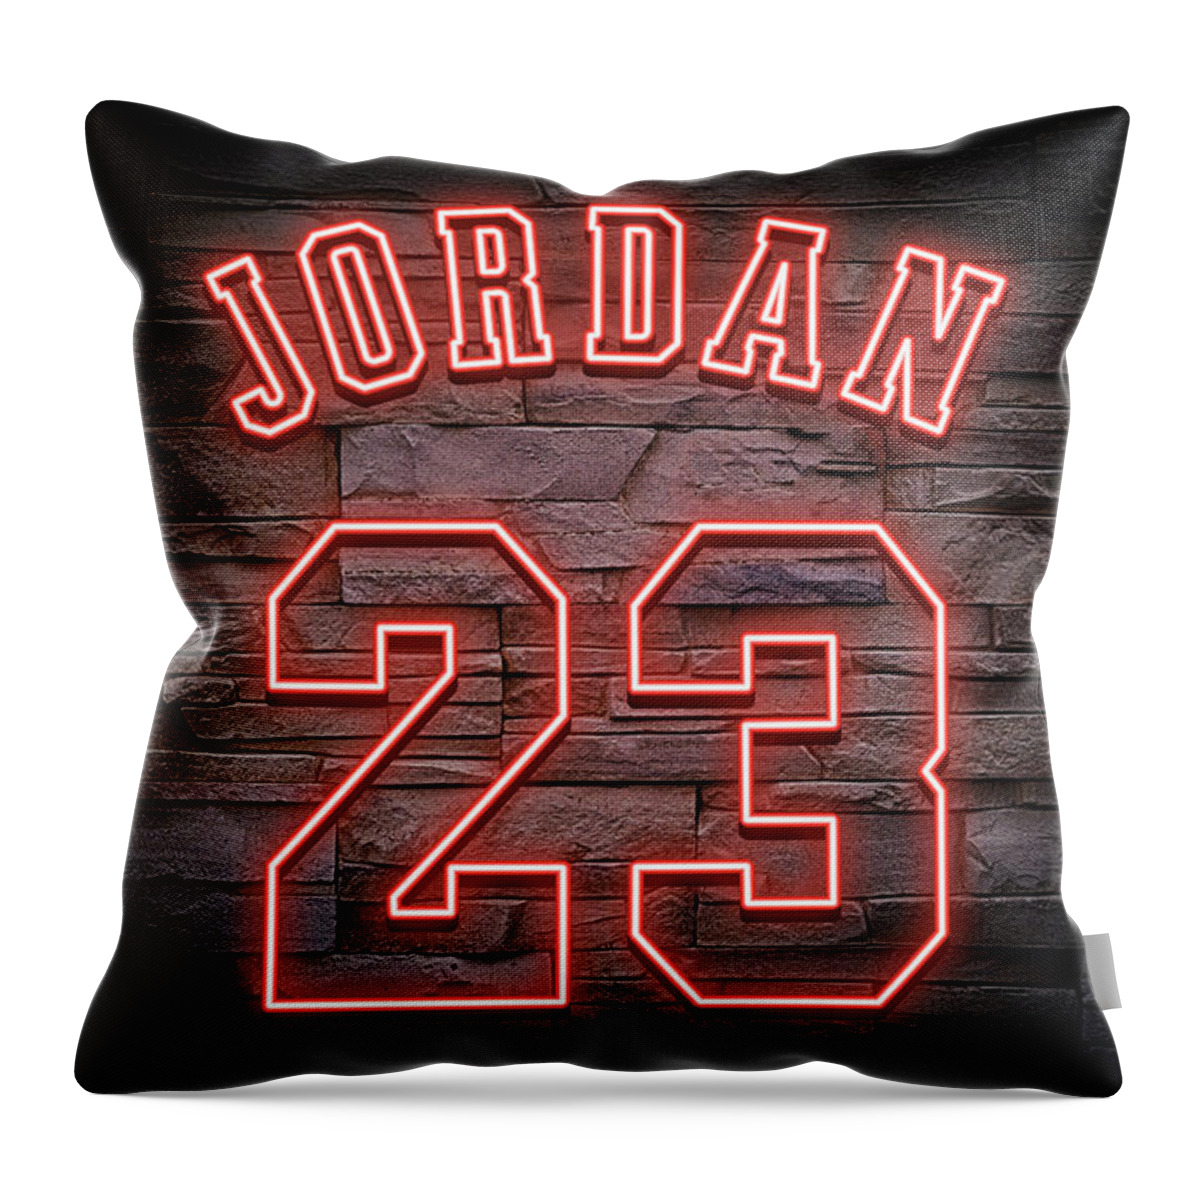 Michael Jordan Throw Pillow featuring the photograph Jordan Neon On Brick by Ricky Barnard